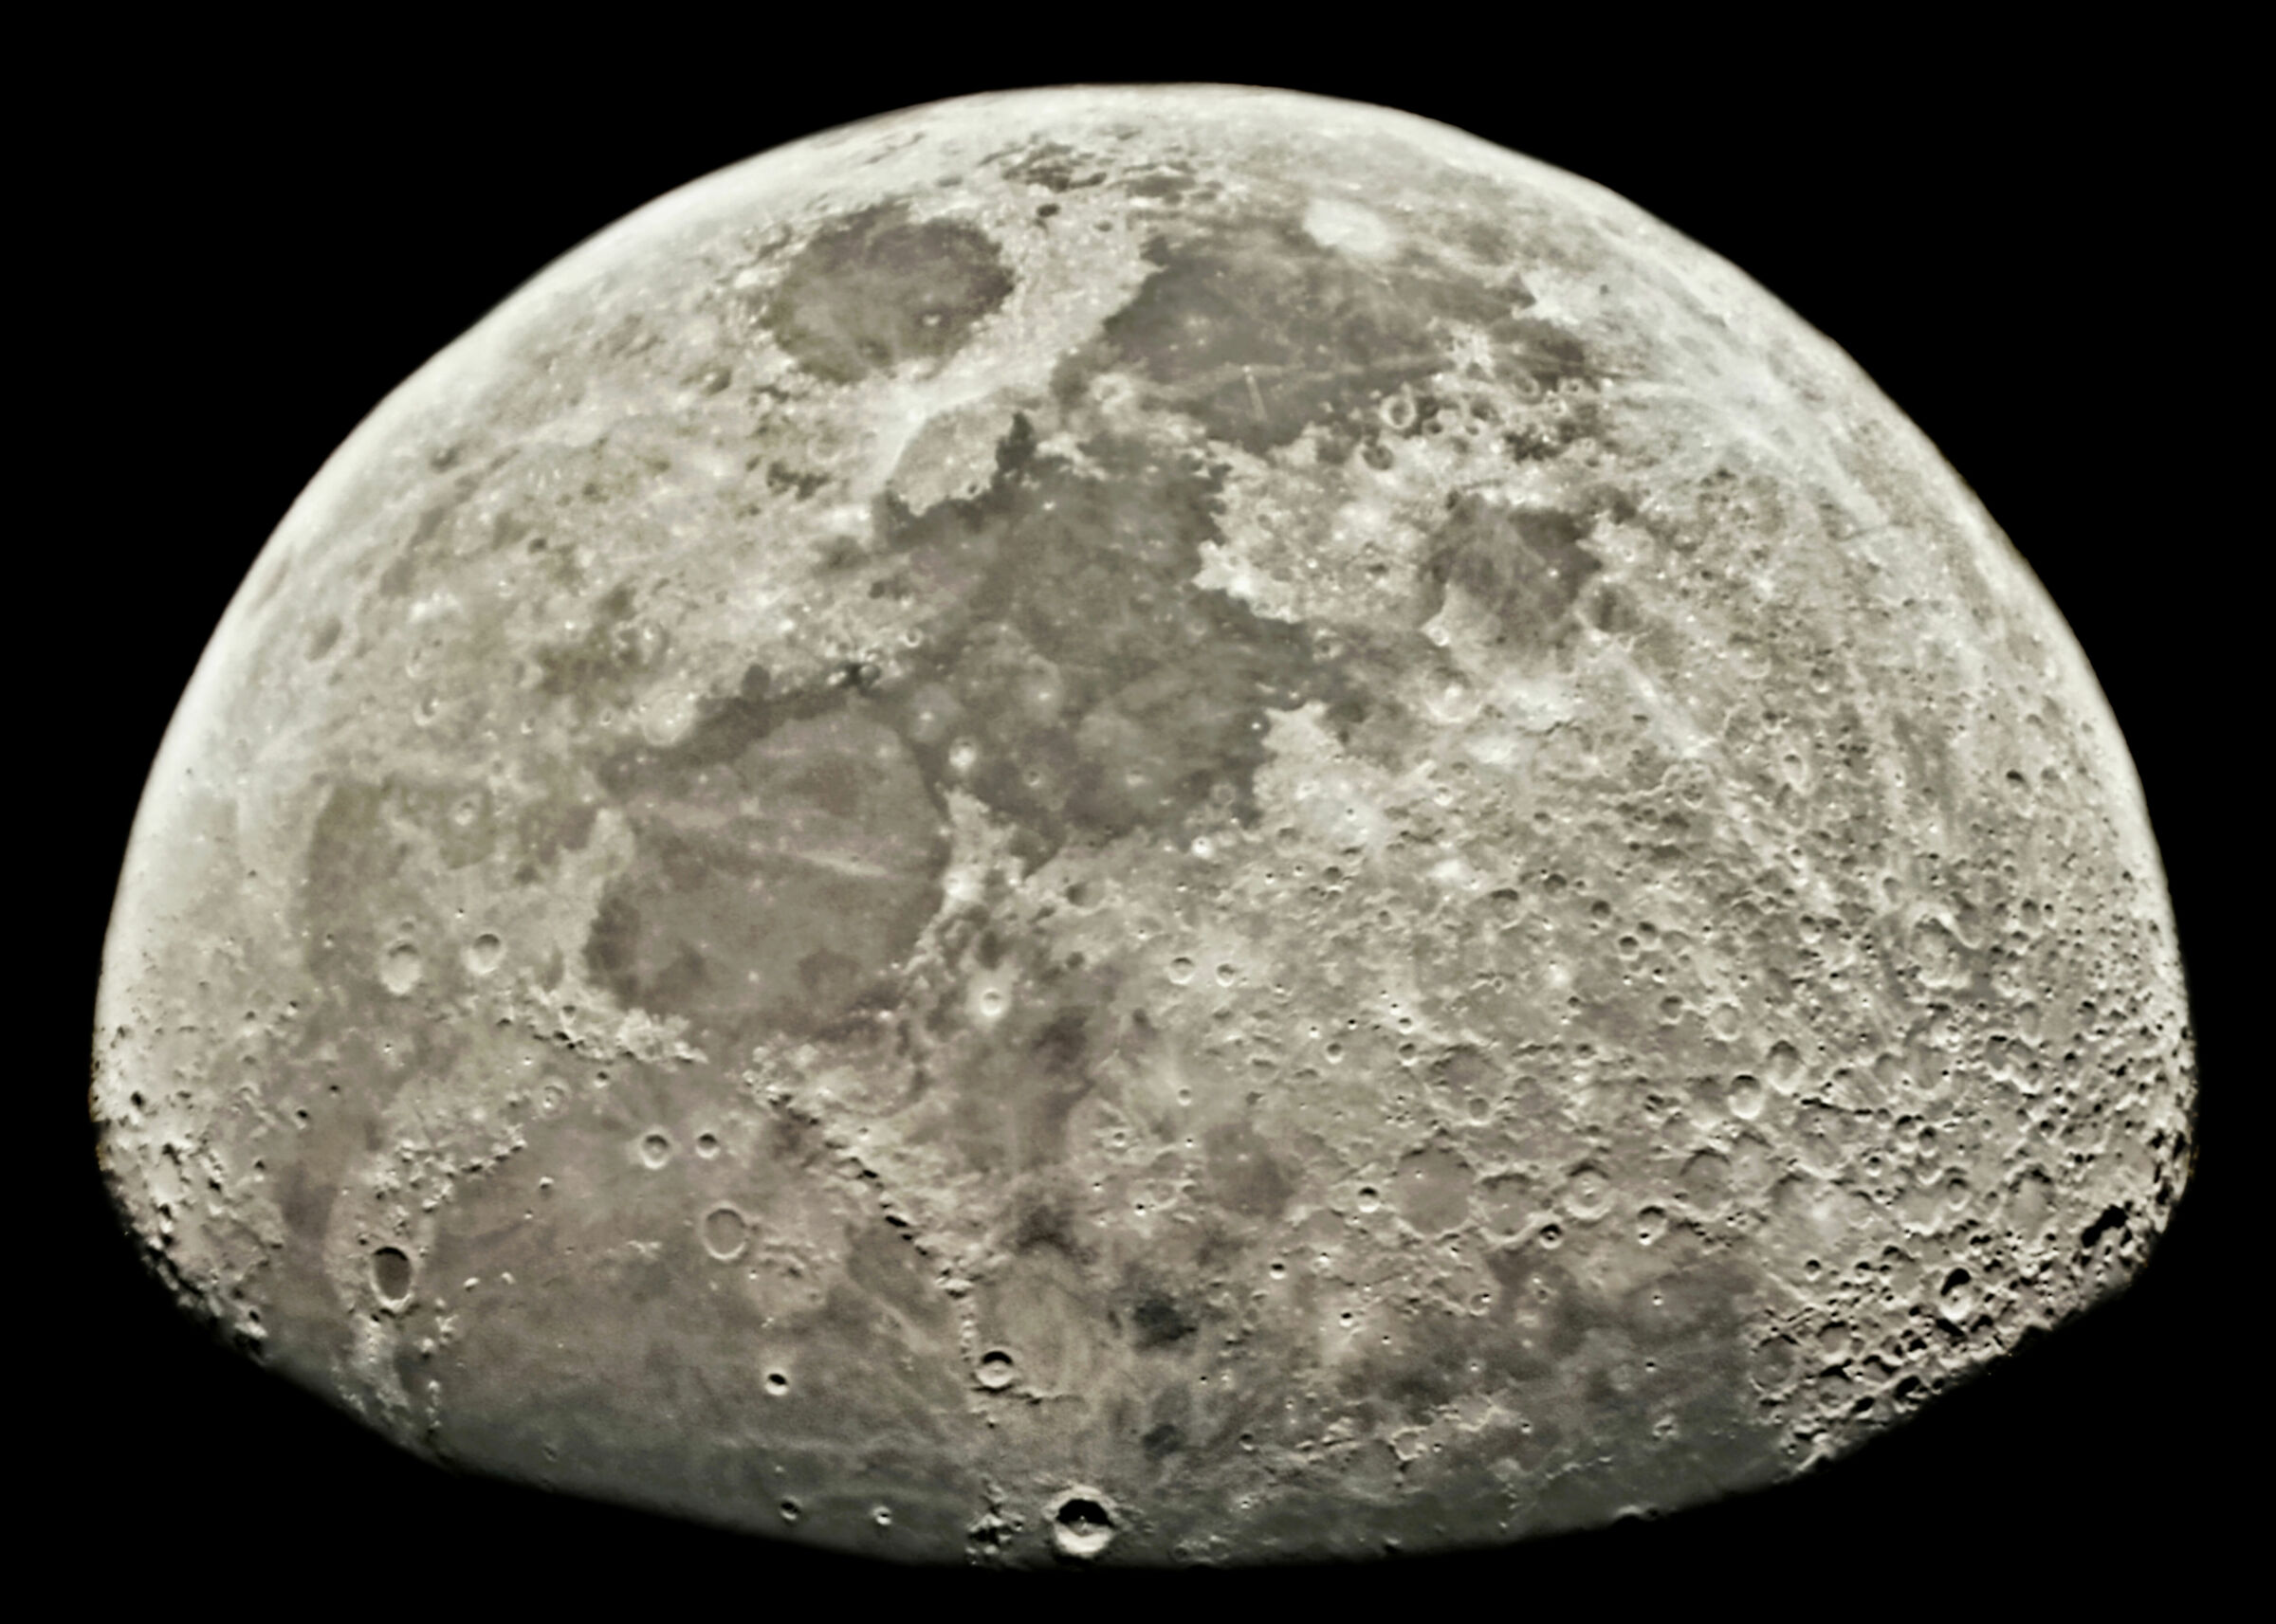 Moon HDR 2 6-11-19...